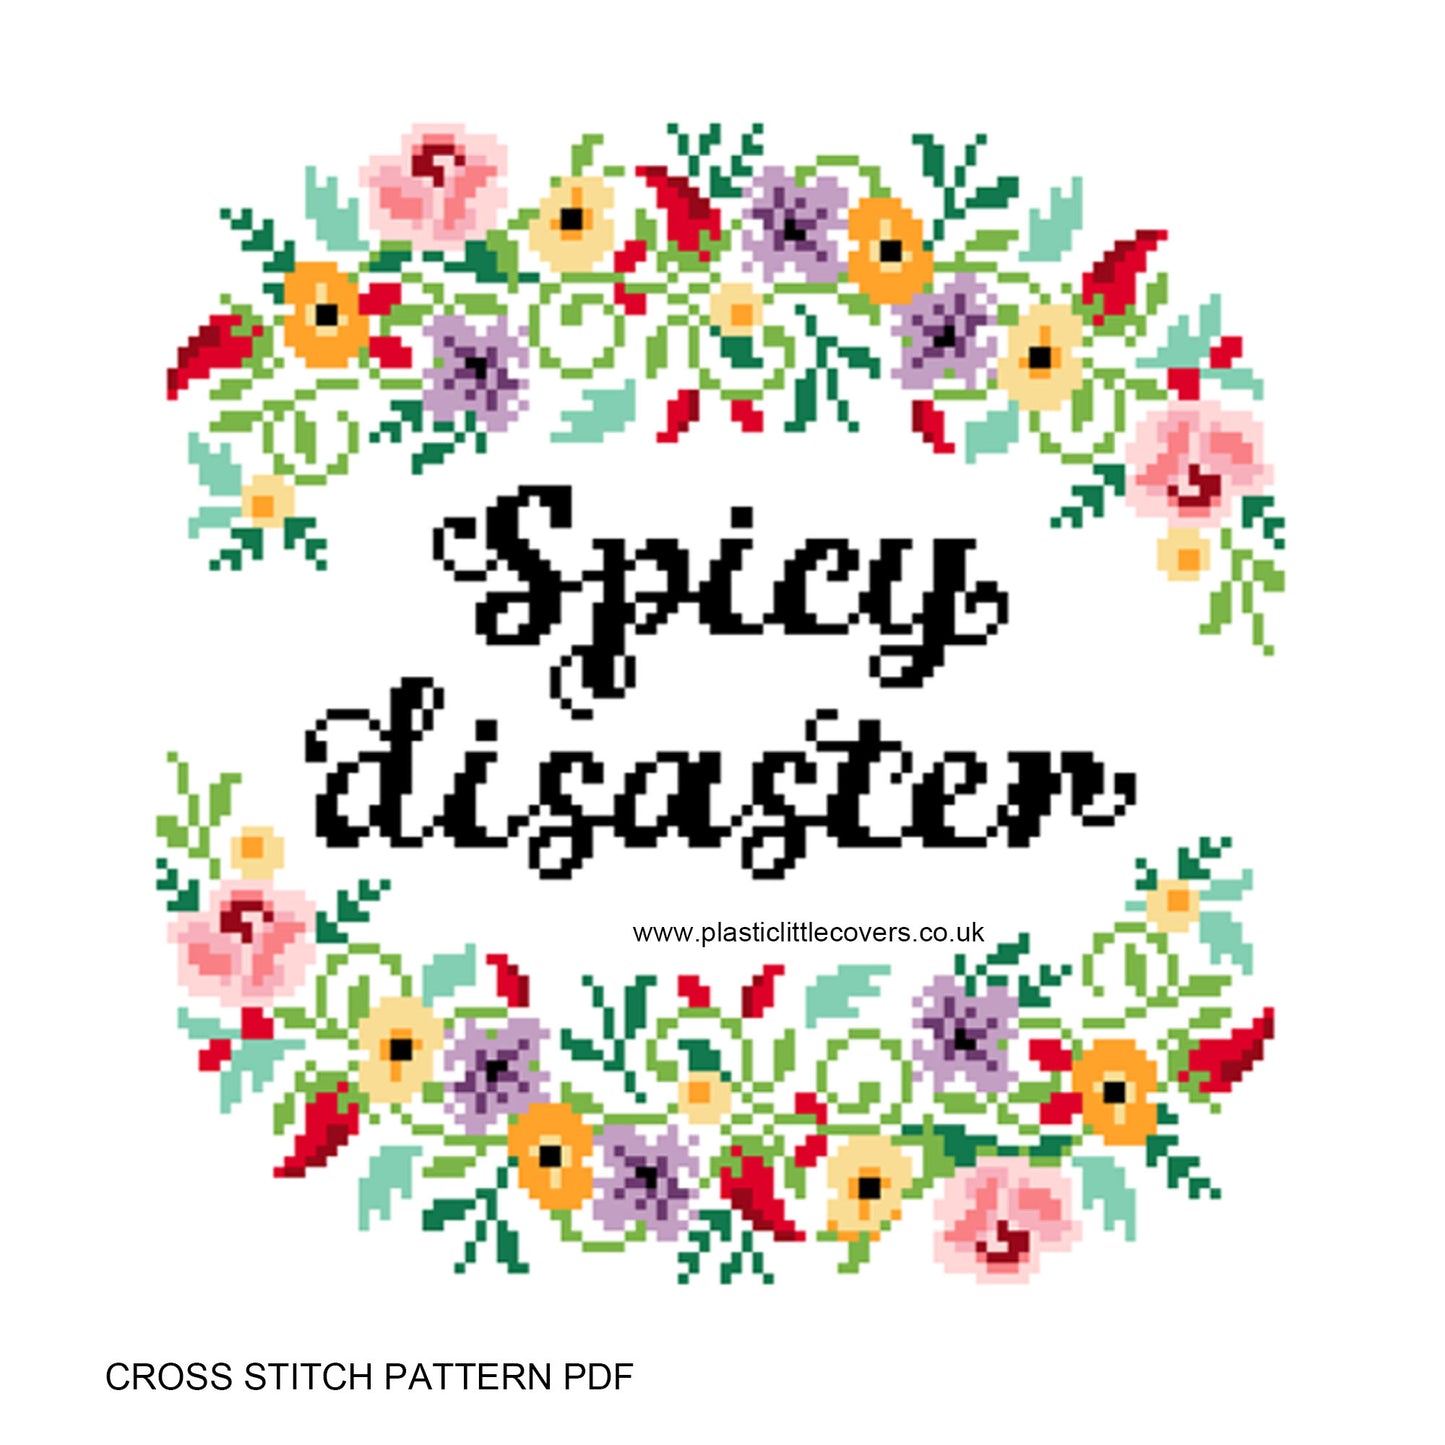 Spicy Disaster - Cross Stitch Pattern PDF.